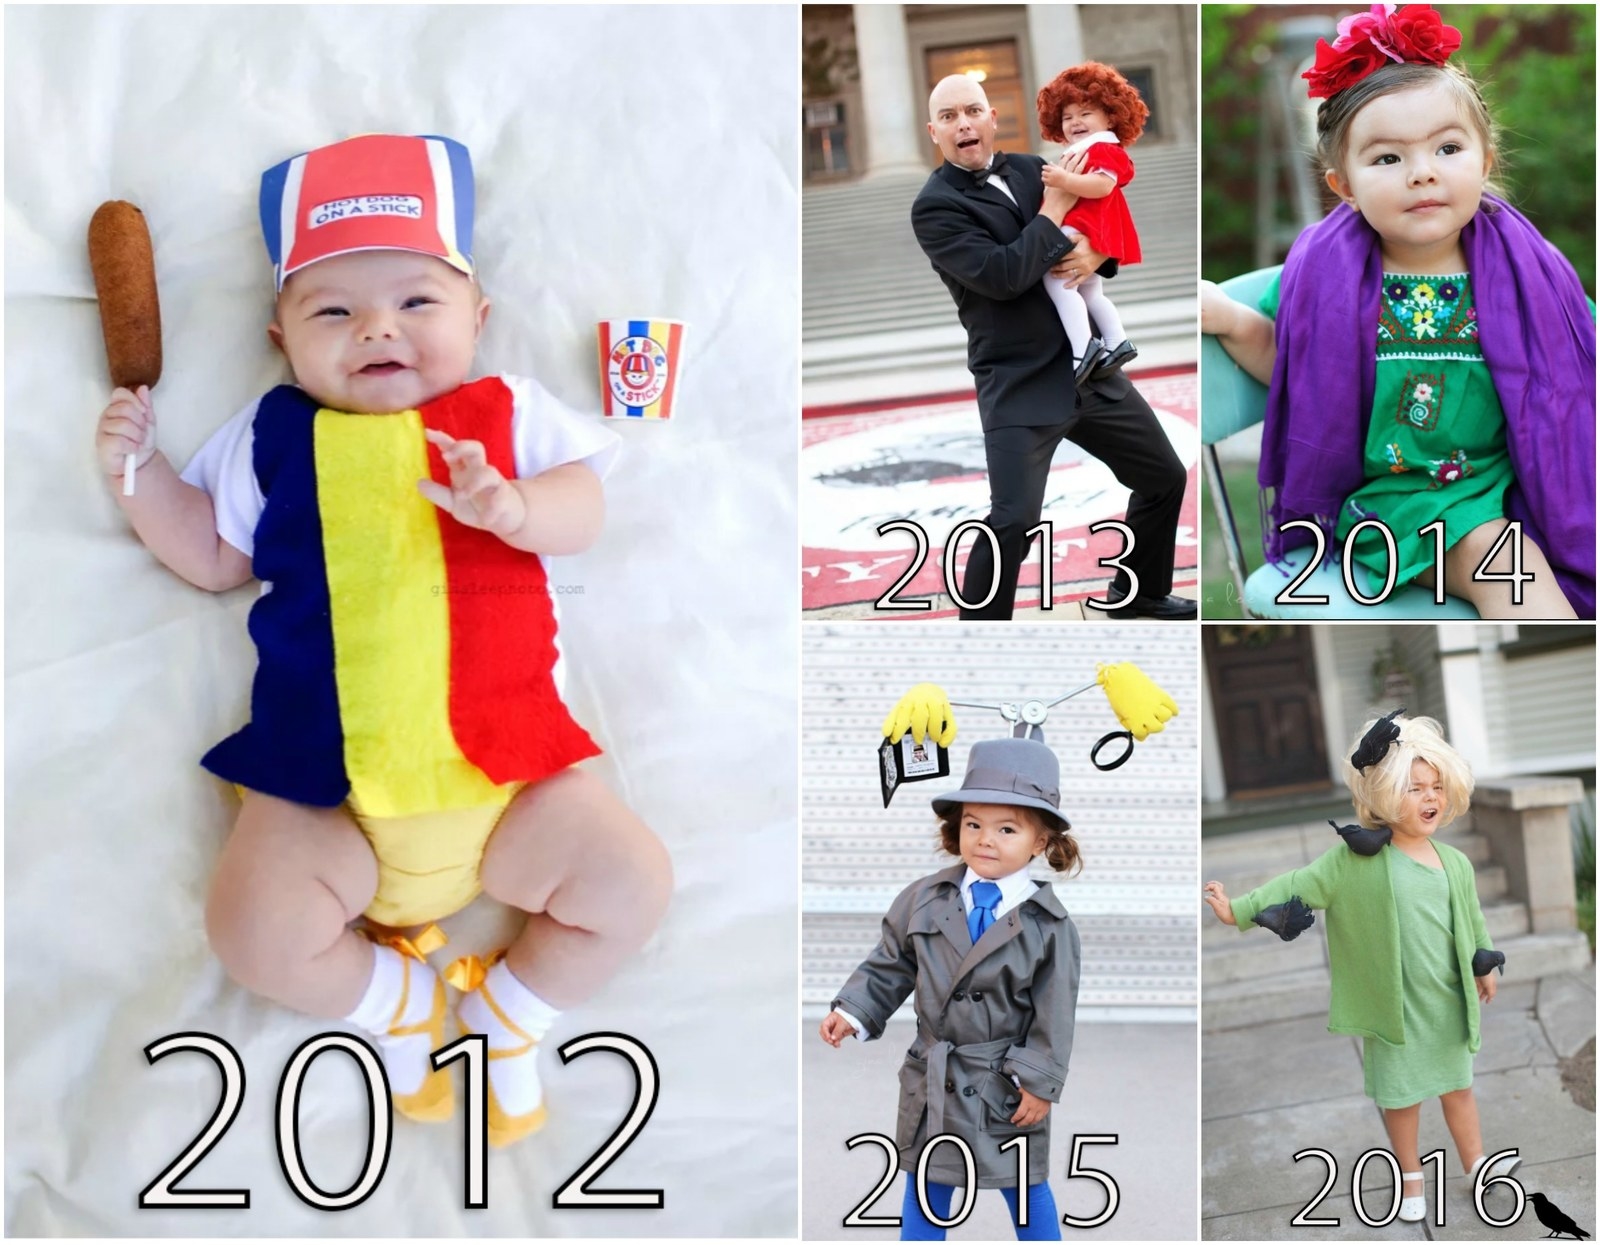 Dress up America- bebé S Squeaky ratón Halloween Pretend Play Disfraz Color 0-6 months 860-0-6 3.5-7 kg, 43-61 cm height